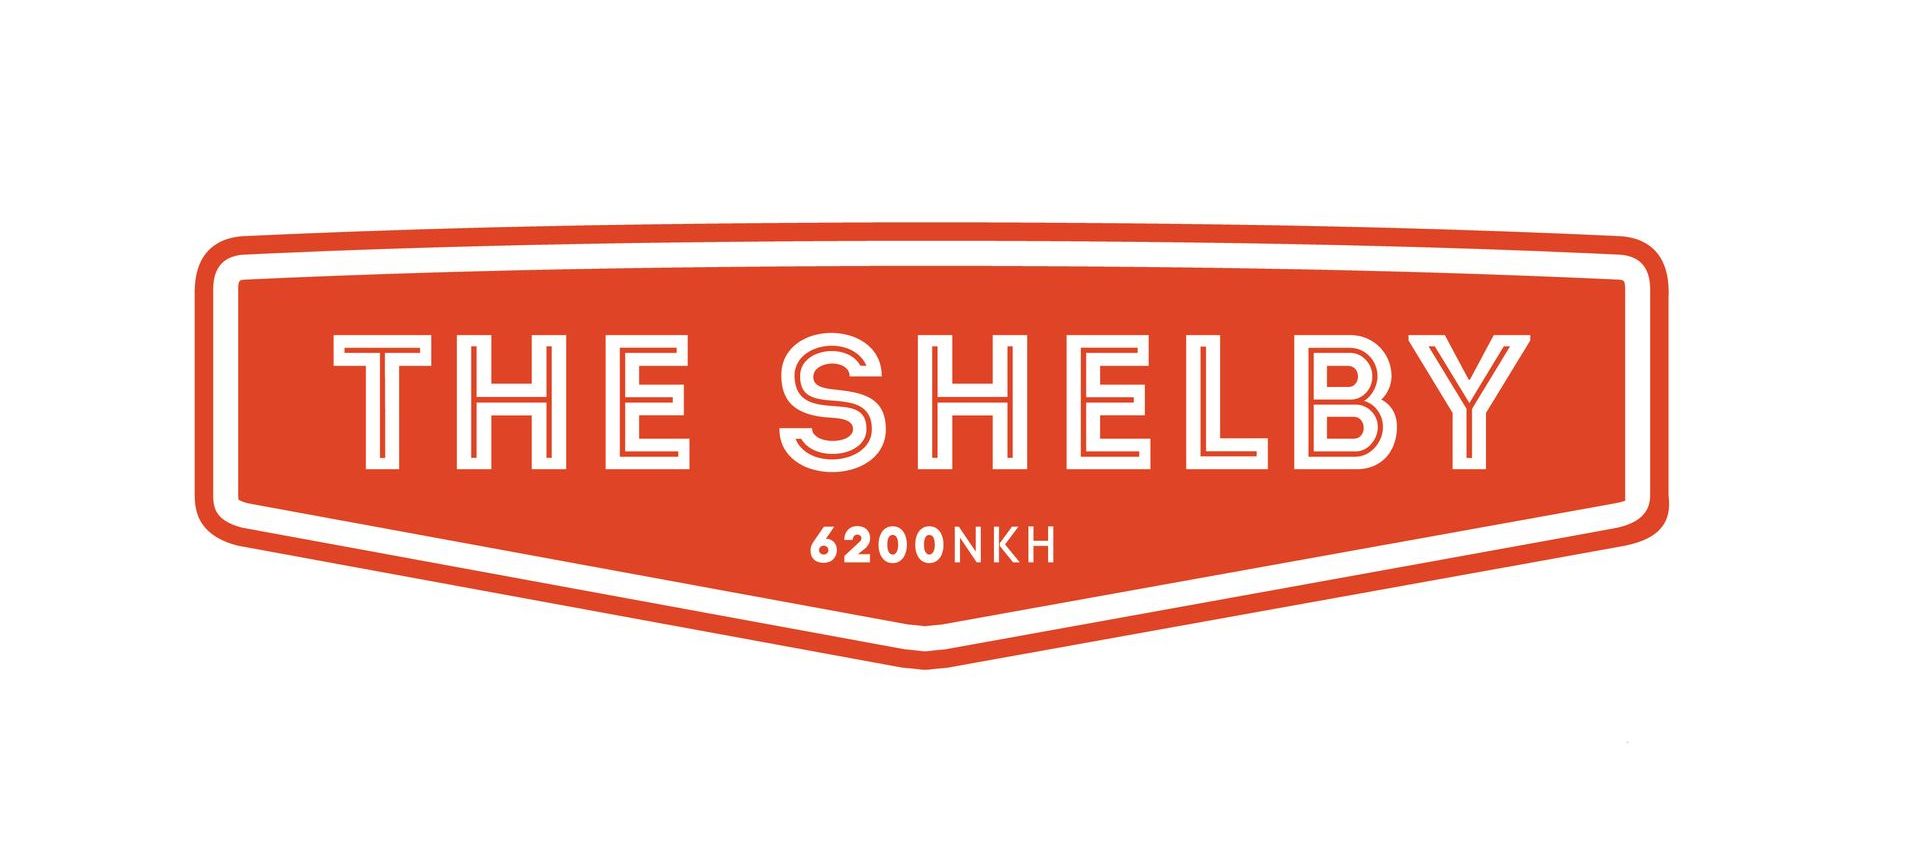 The Shelby logo.